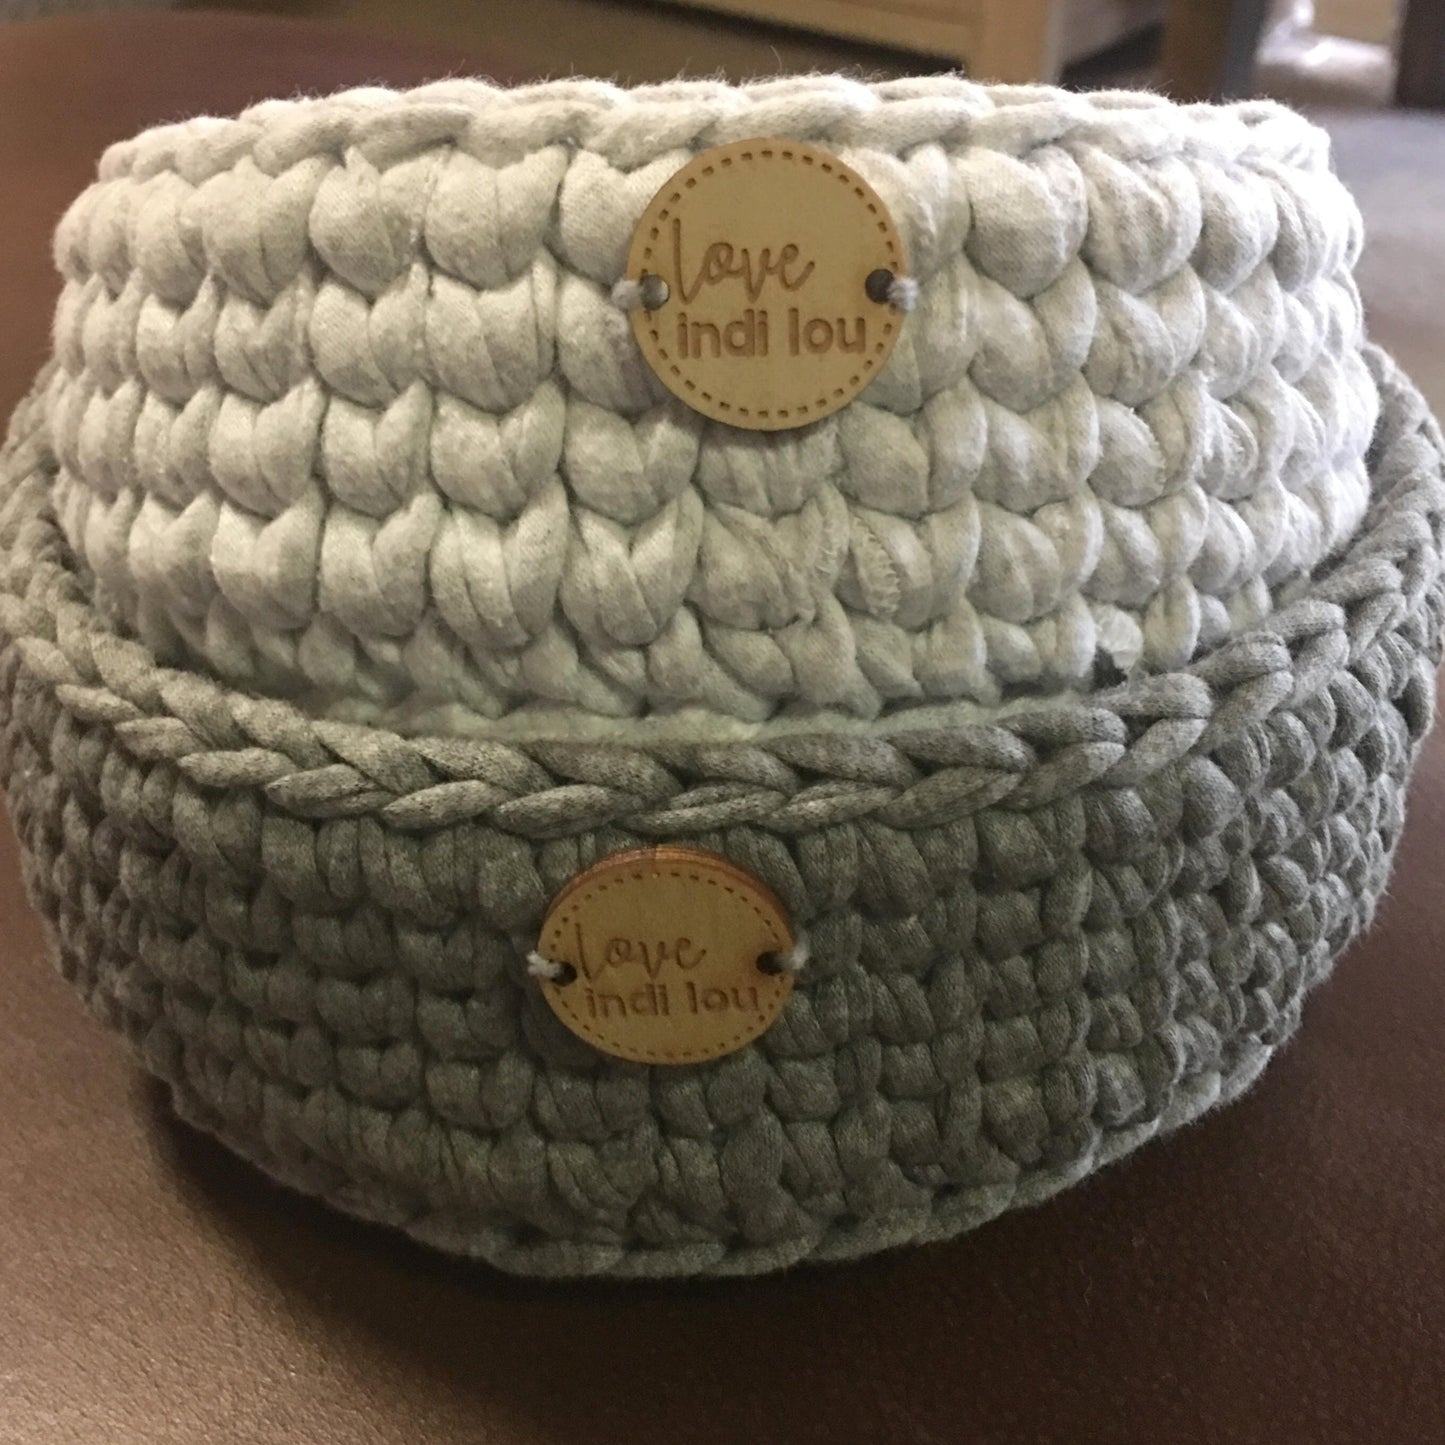 Crochet Storage Basket - Grey